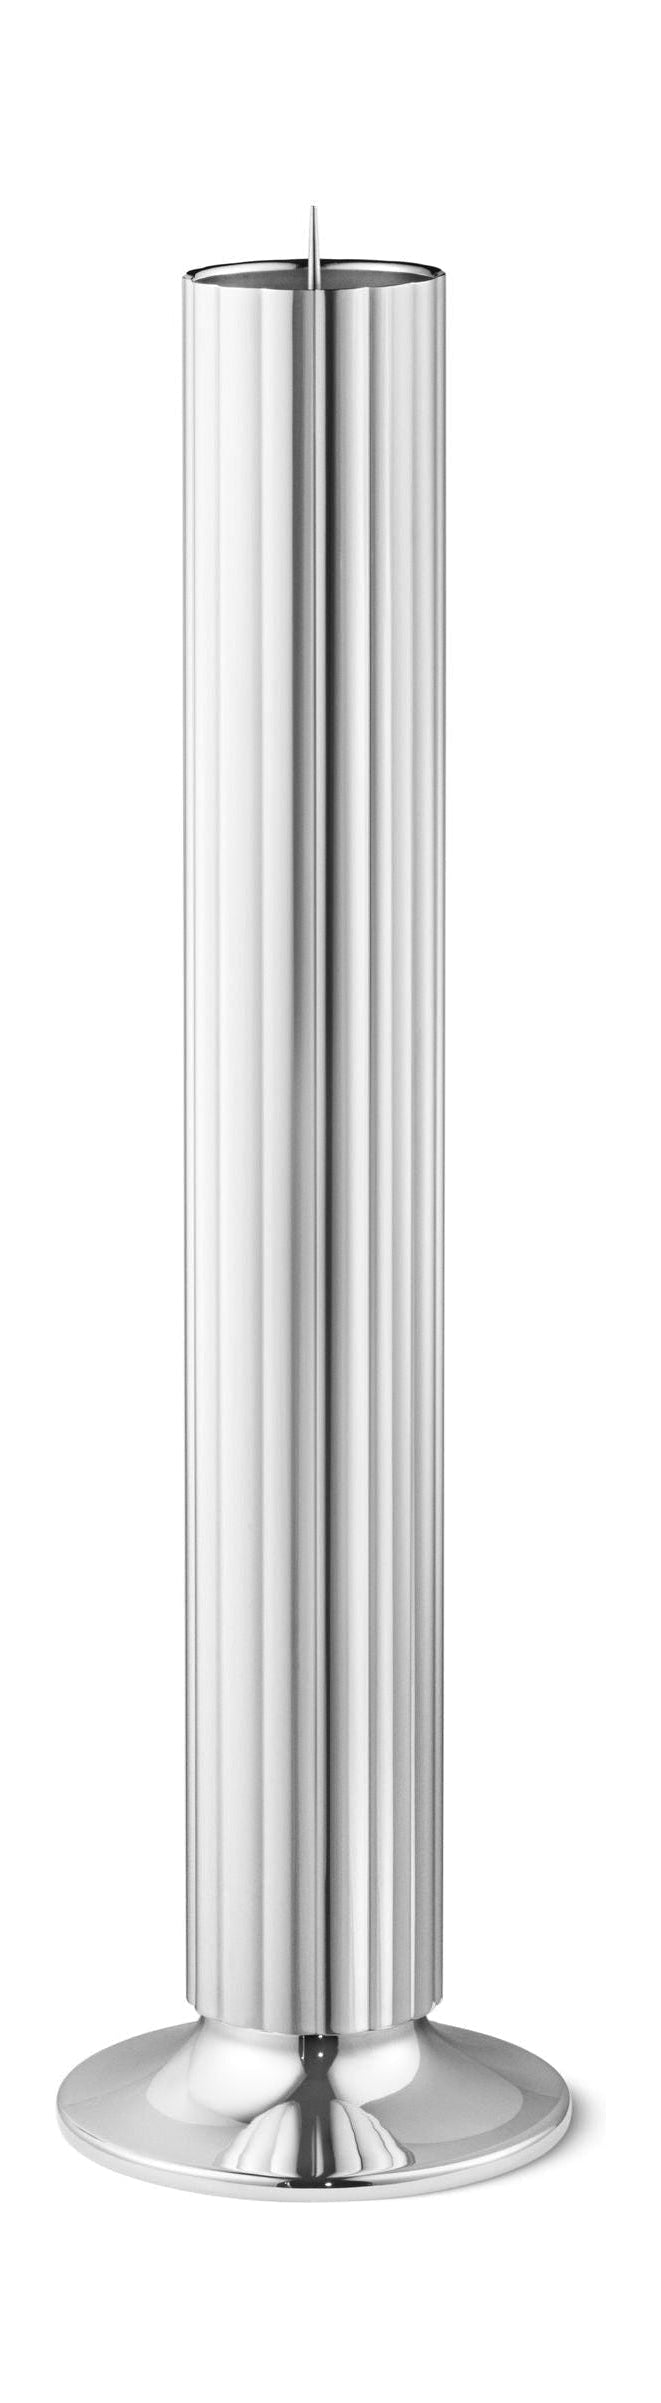 Georg Jensen Bernadott Candle Holder roestvrij staal, H: 50 cm